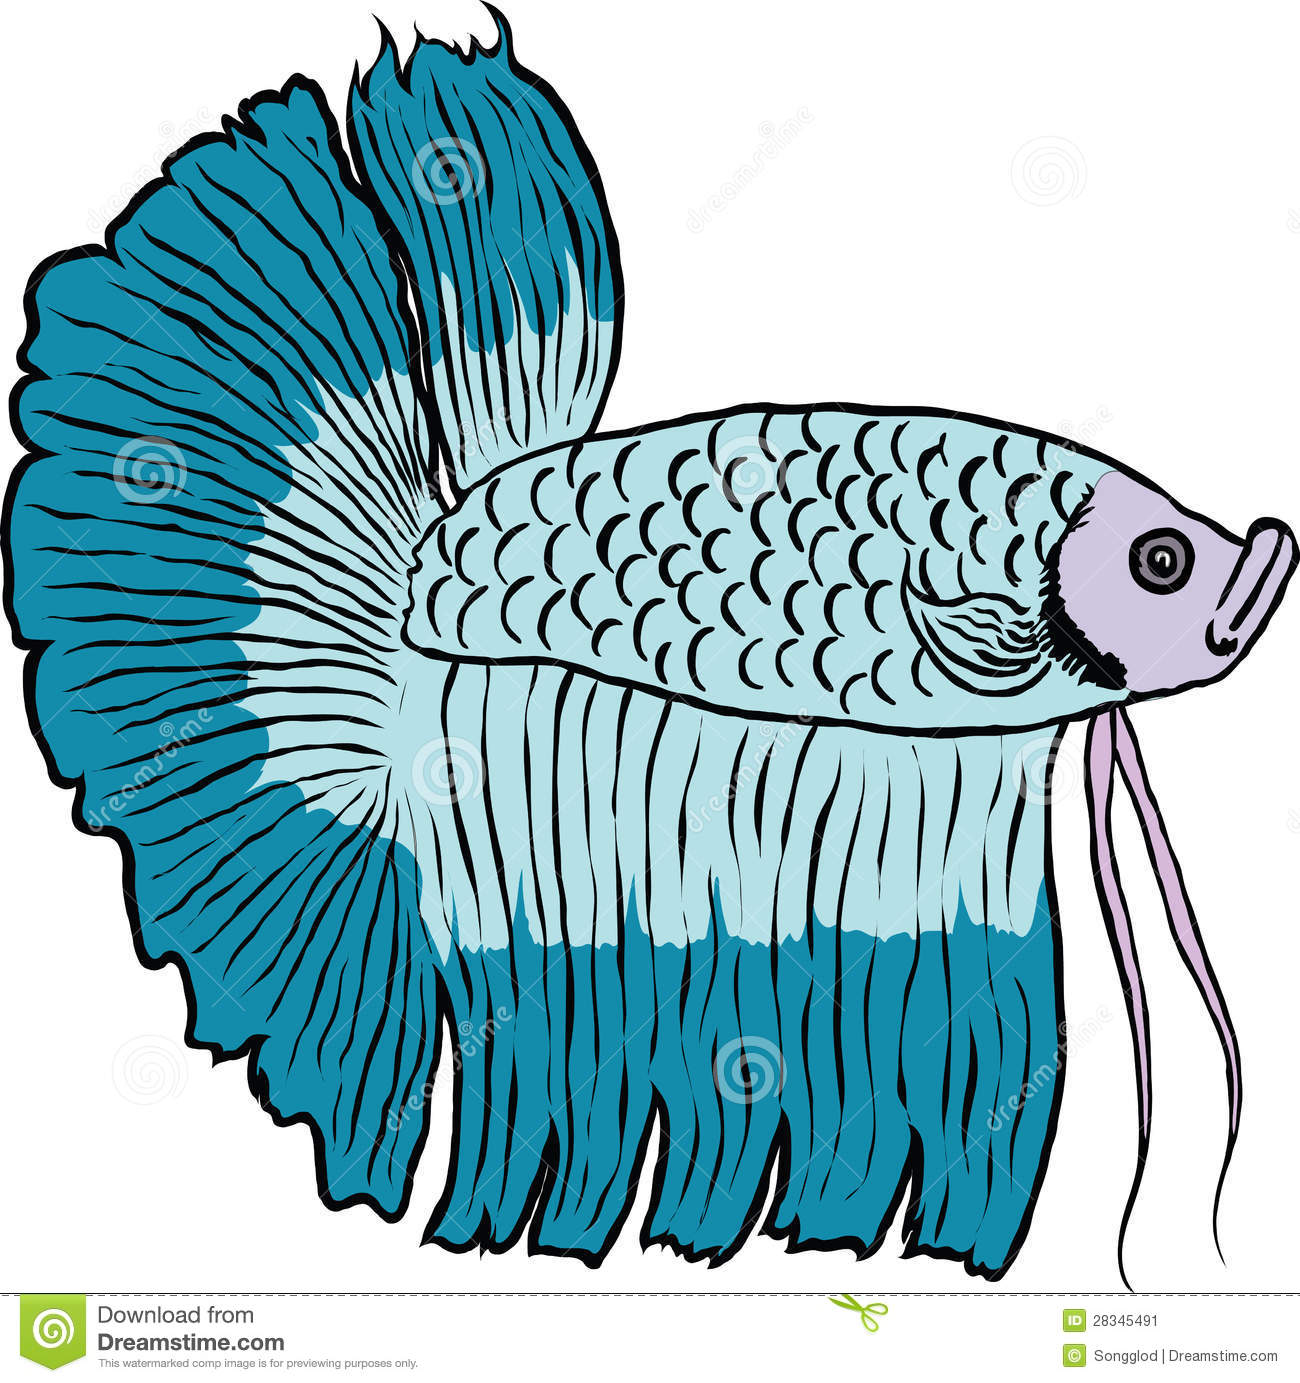 Betta fish or Siamese fighting fish Stock Image